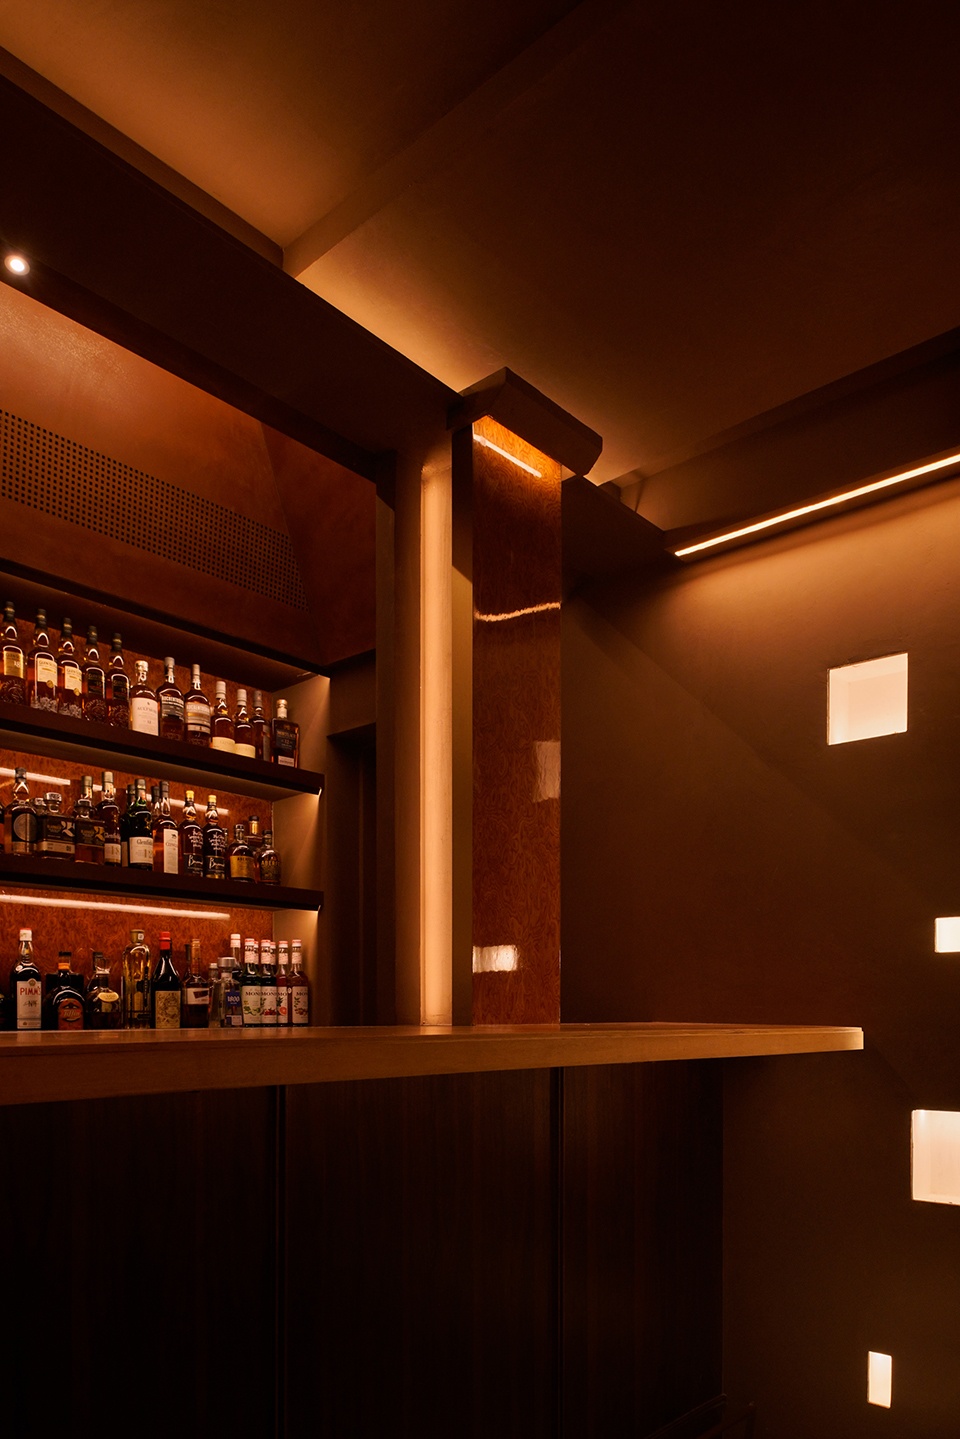 酒吧设计,咖啡厅设计,上海酒吧设计,上海咖啡厅设计,酒吧设计案例,酒馆设计,La cour酒吧,La cour咖啡厅,上海La cour酒吧,All Design Studio